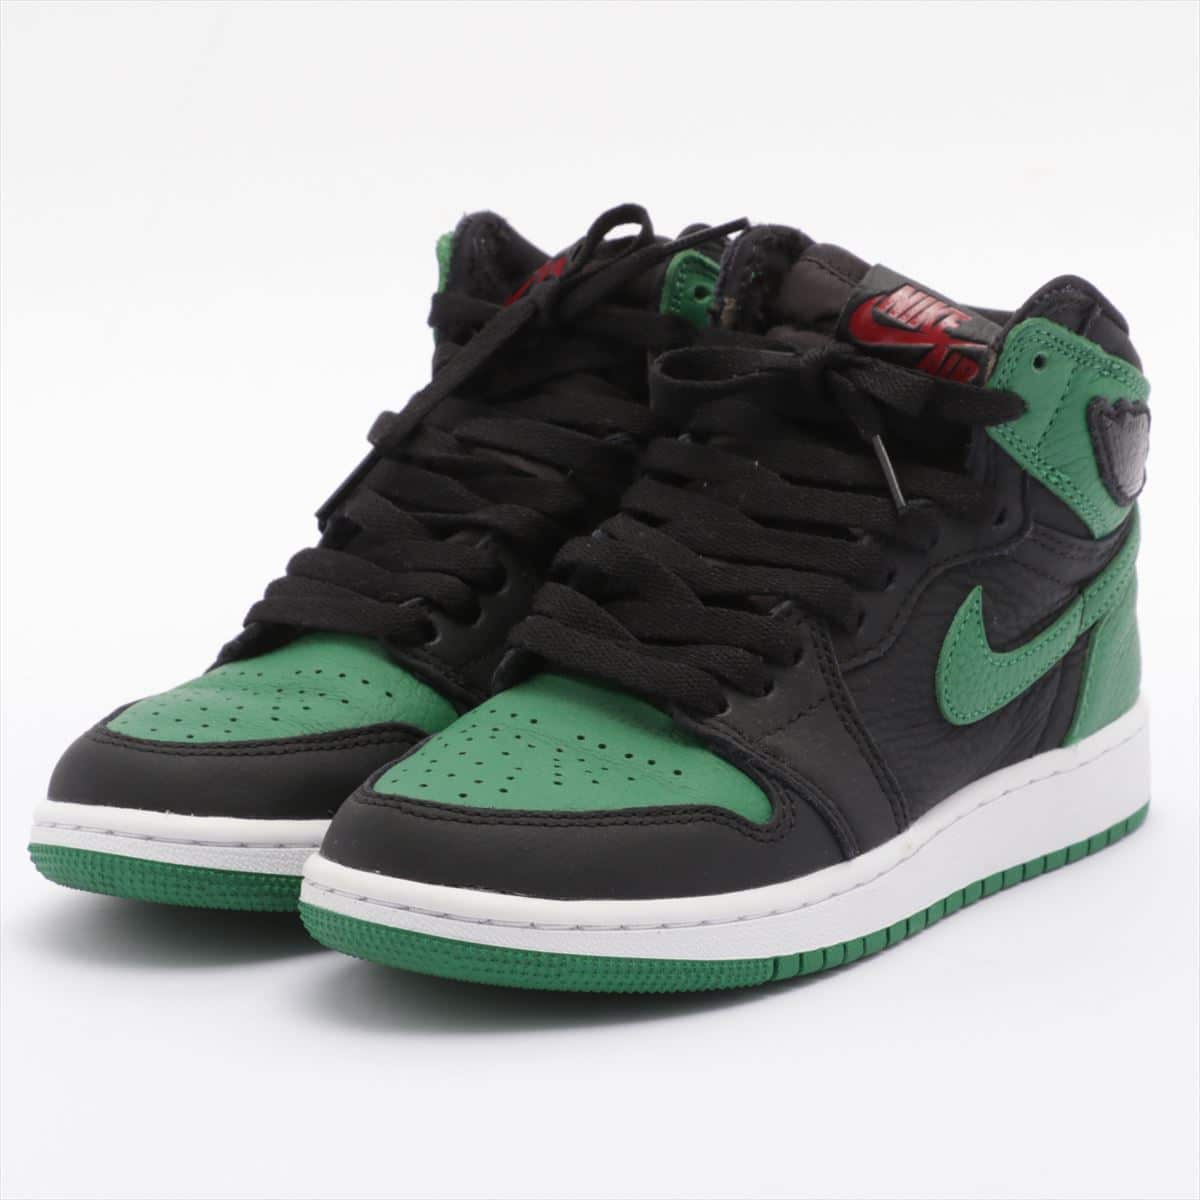 Nike AIR JORDAN 1 RETRO HIGH OG Suede Sneakers 22.5 Kids Green x black 555088-030